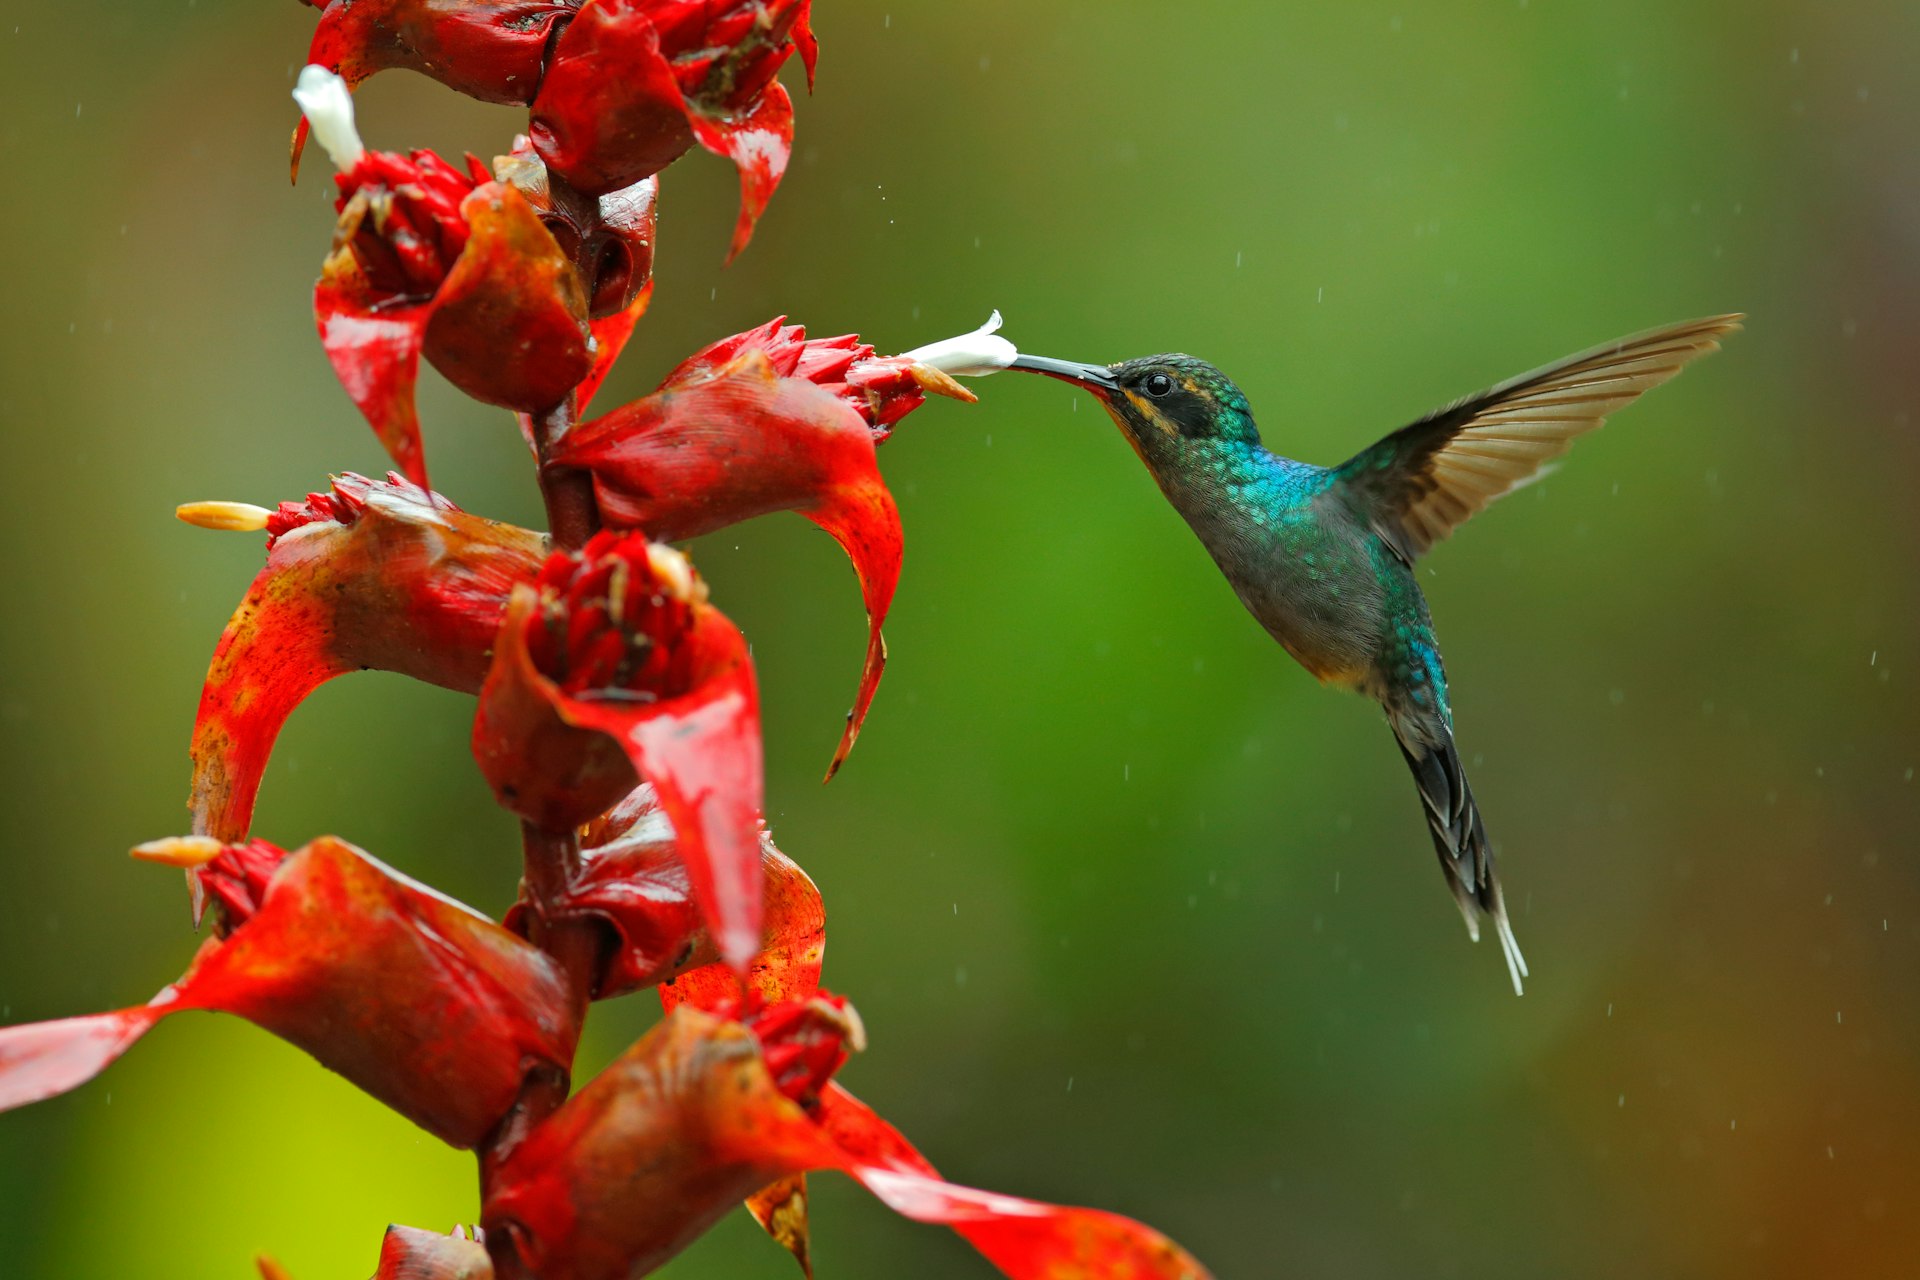 A green hummingbird drinks from a beautiful red flower. 